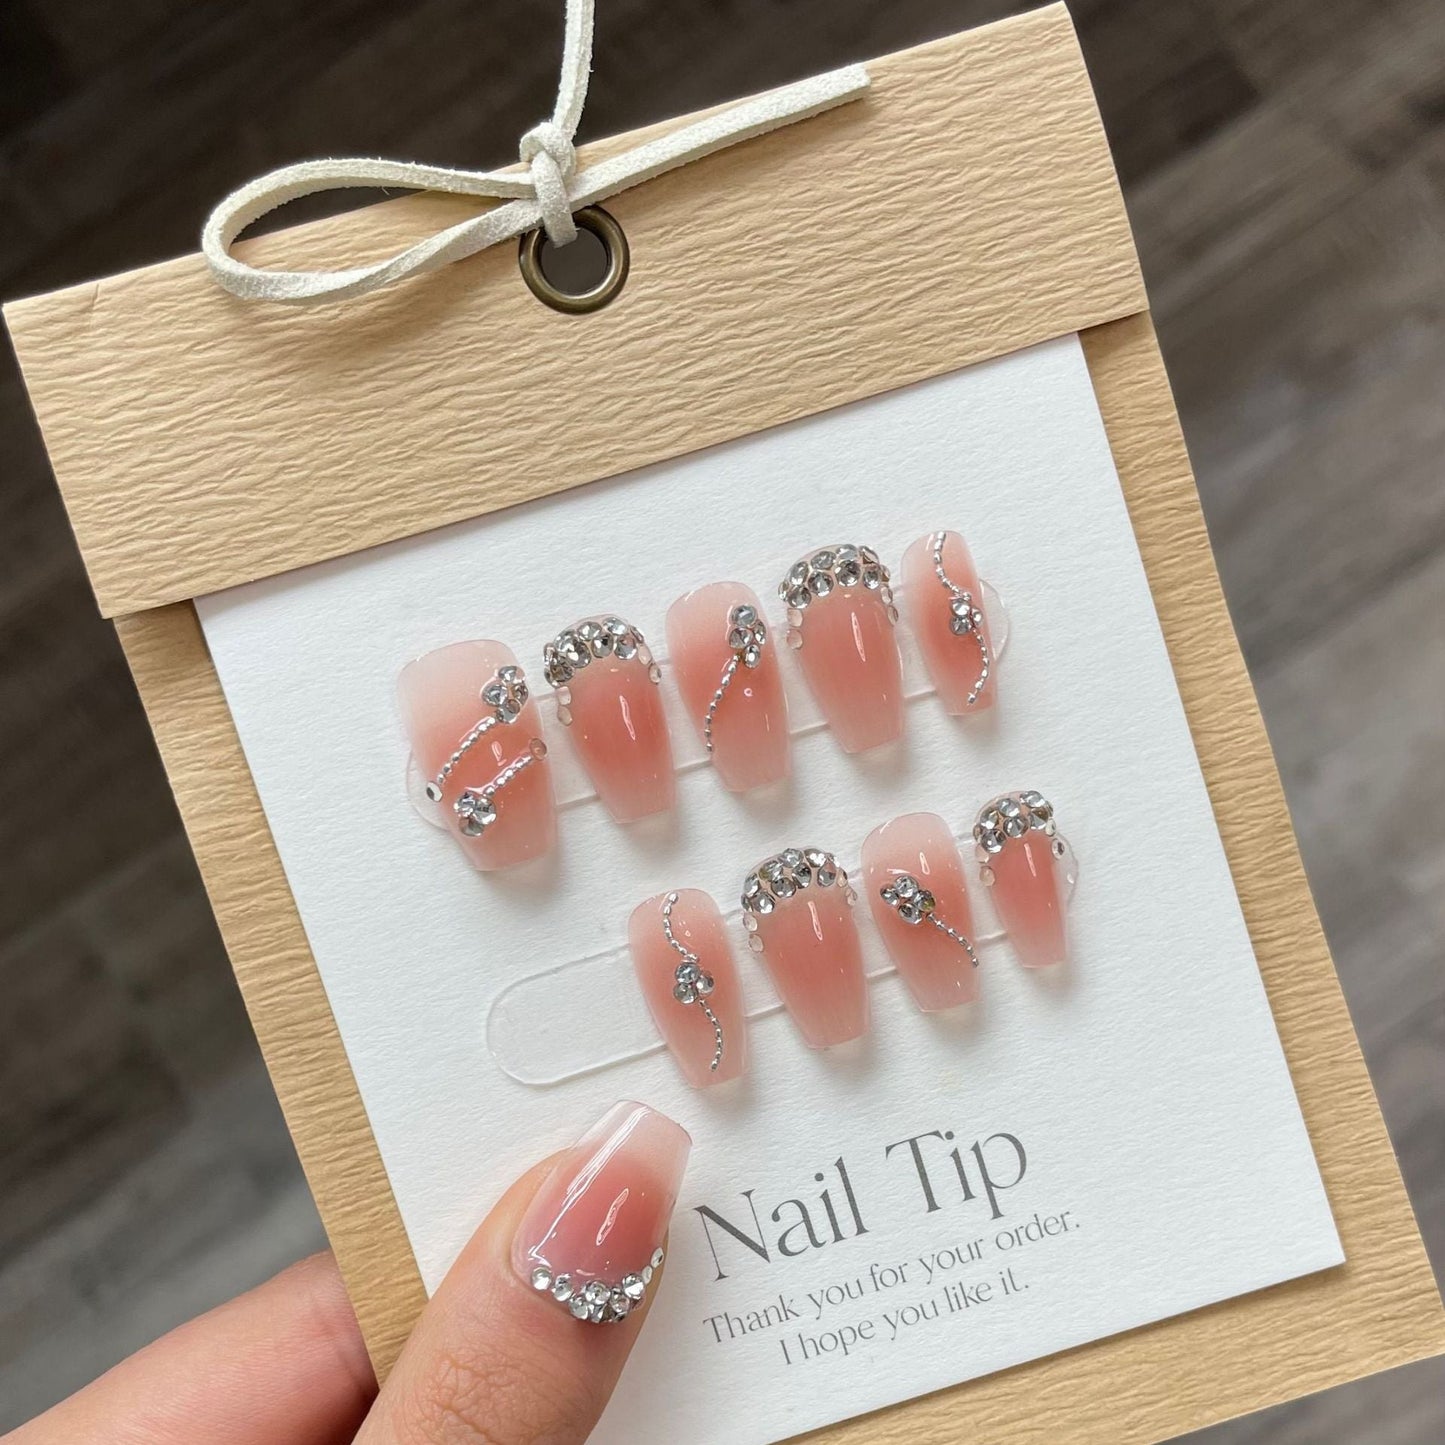 810/817 Rhinestone bride style press on nails 100% handmade false nails pink